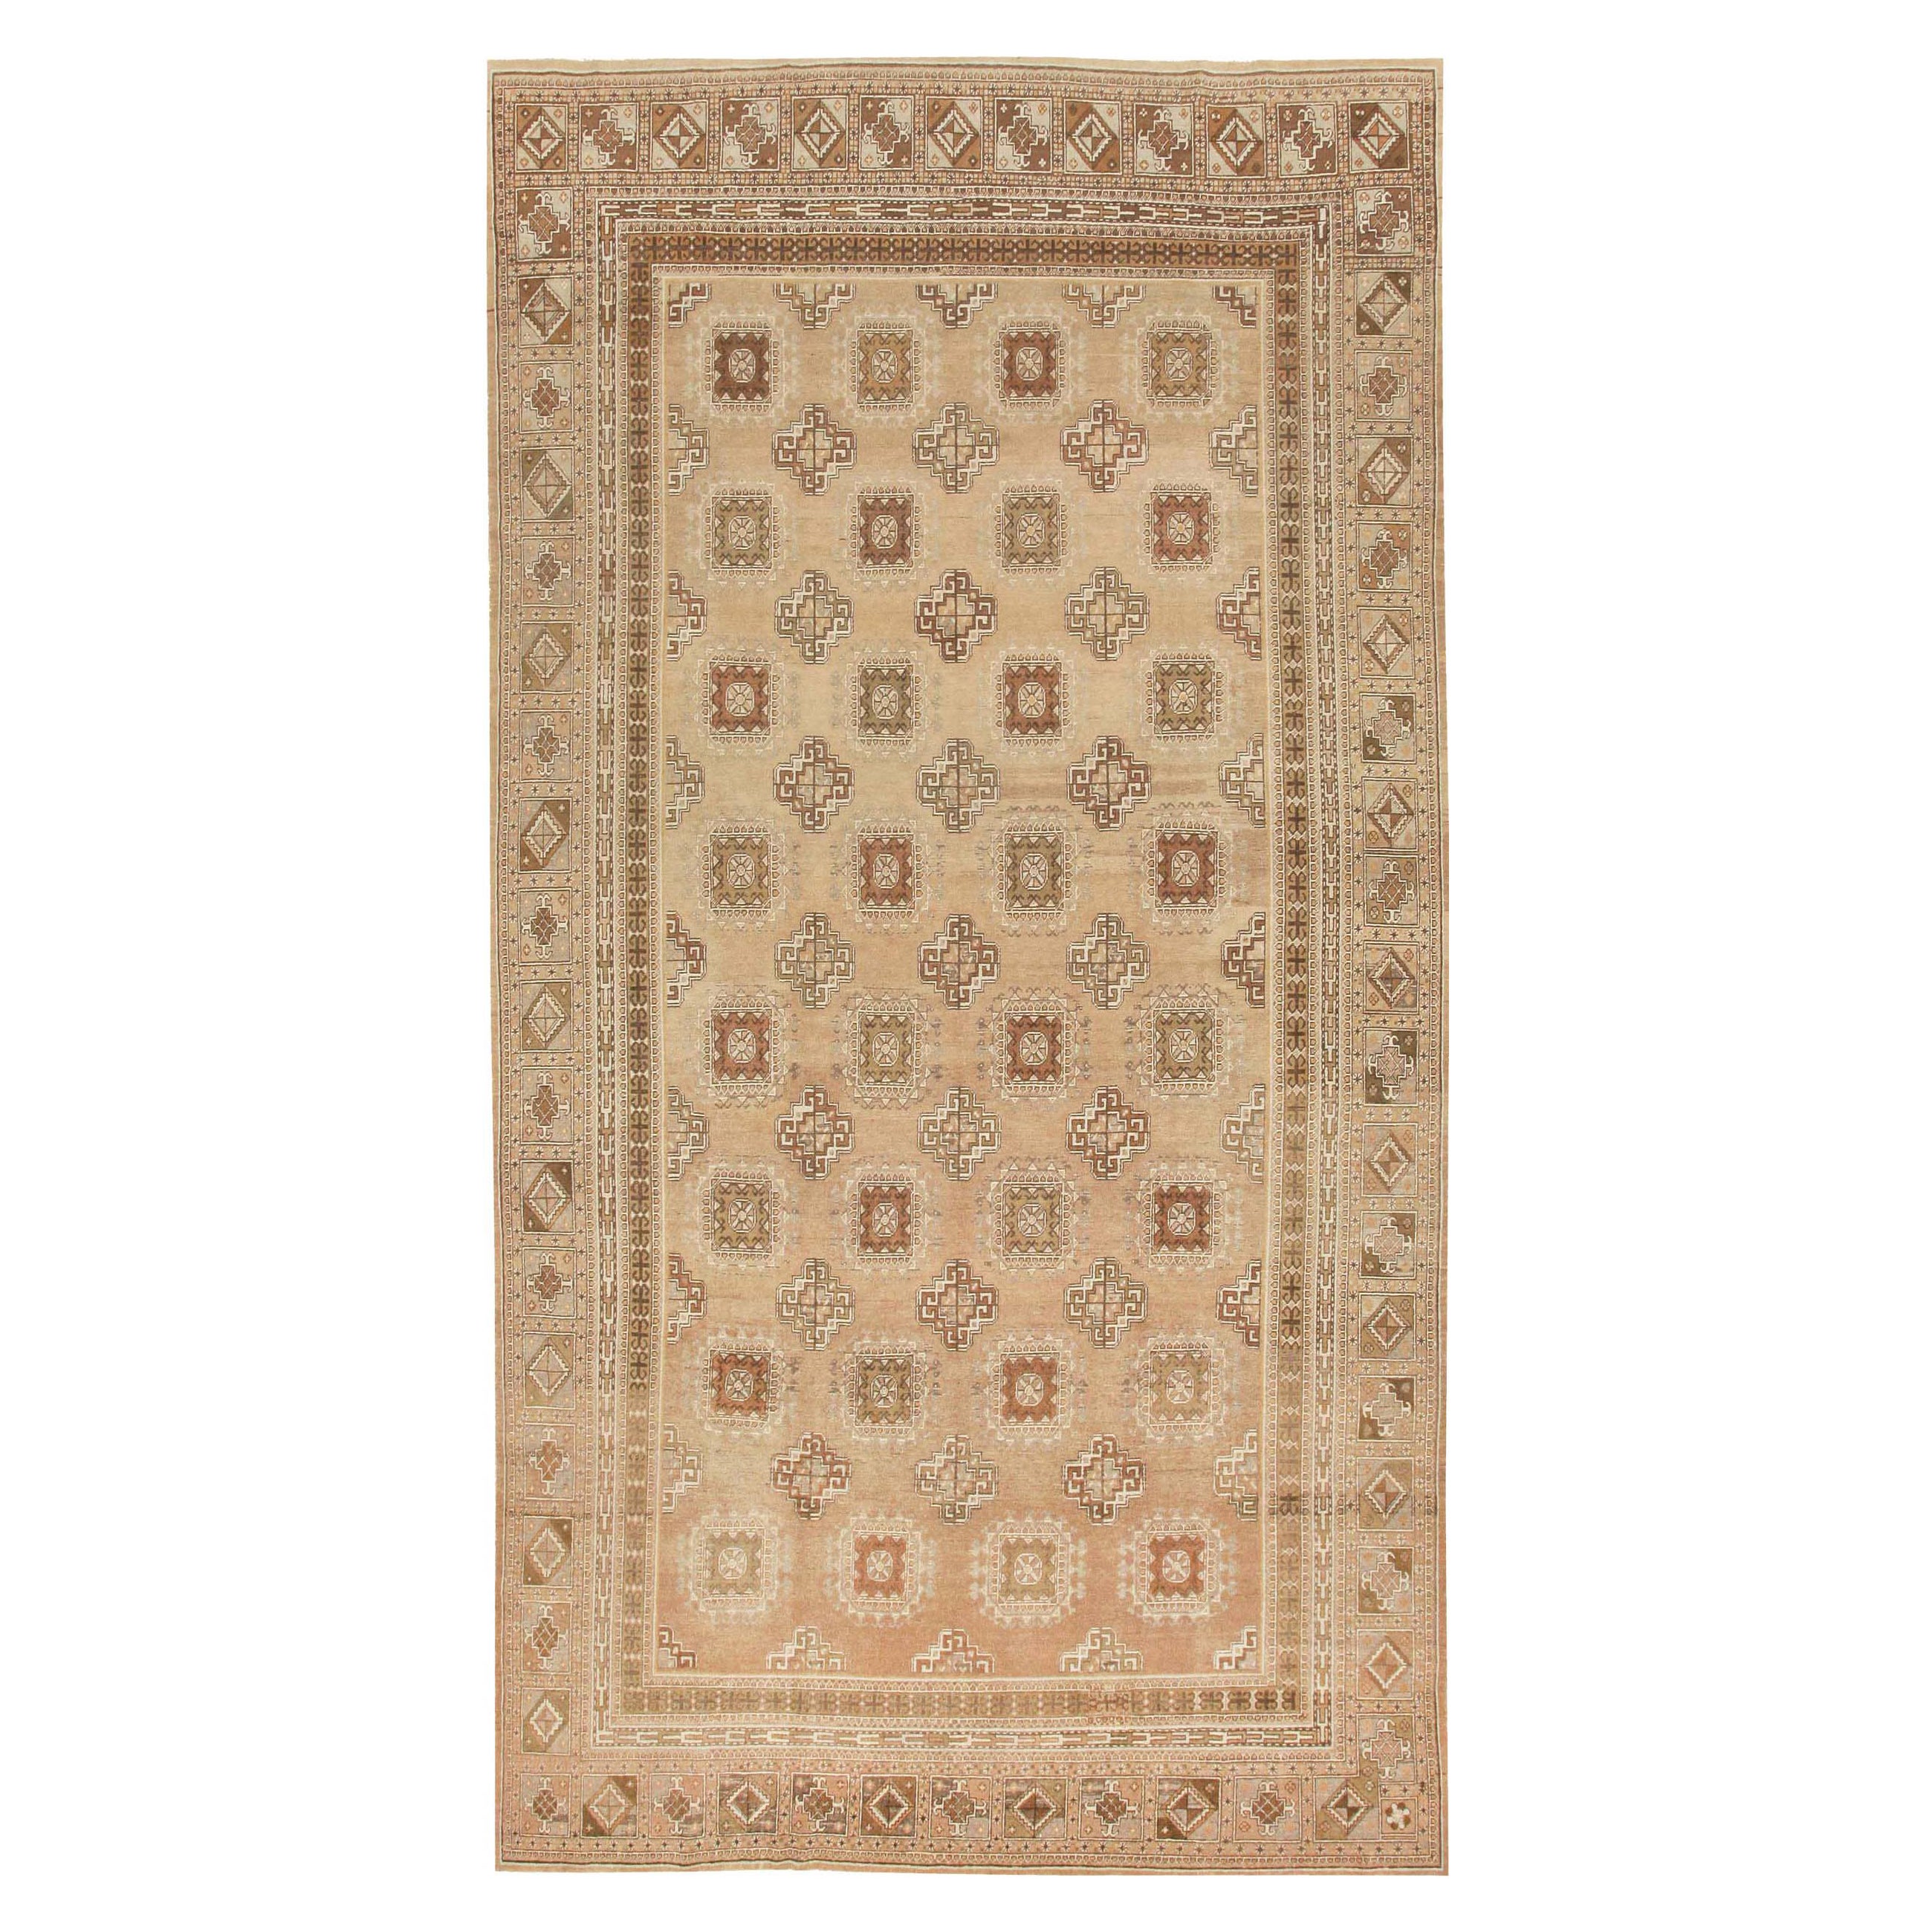 Nazmiyal Collection Antique Khotan Carpet. Size: 9 ft x 17 ft 2 in